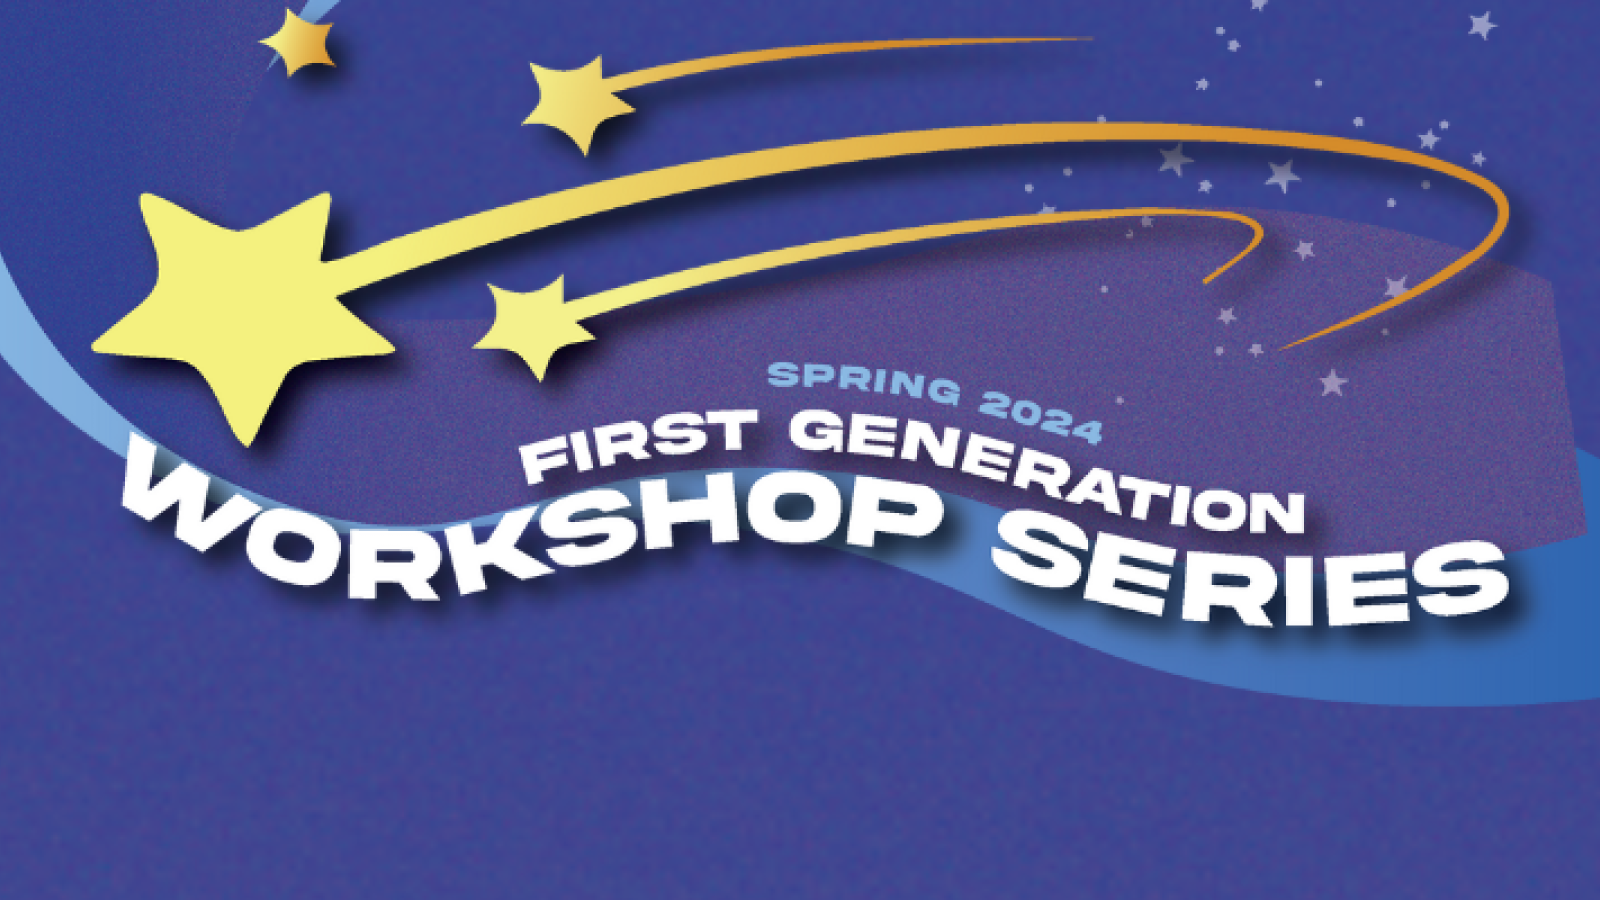 Spring 2024 First Generation Workshop Series